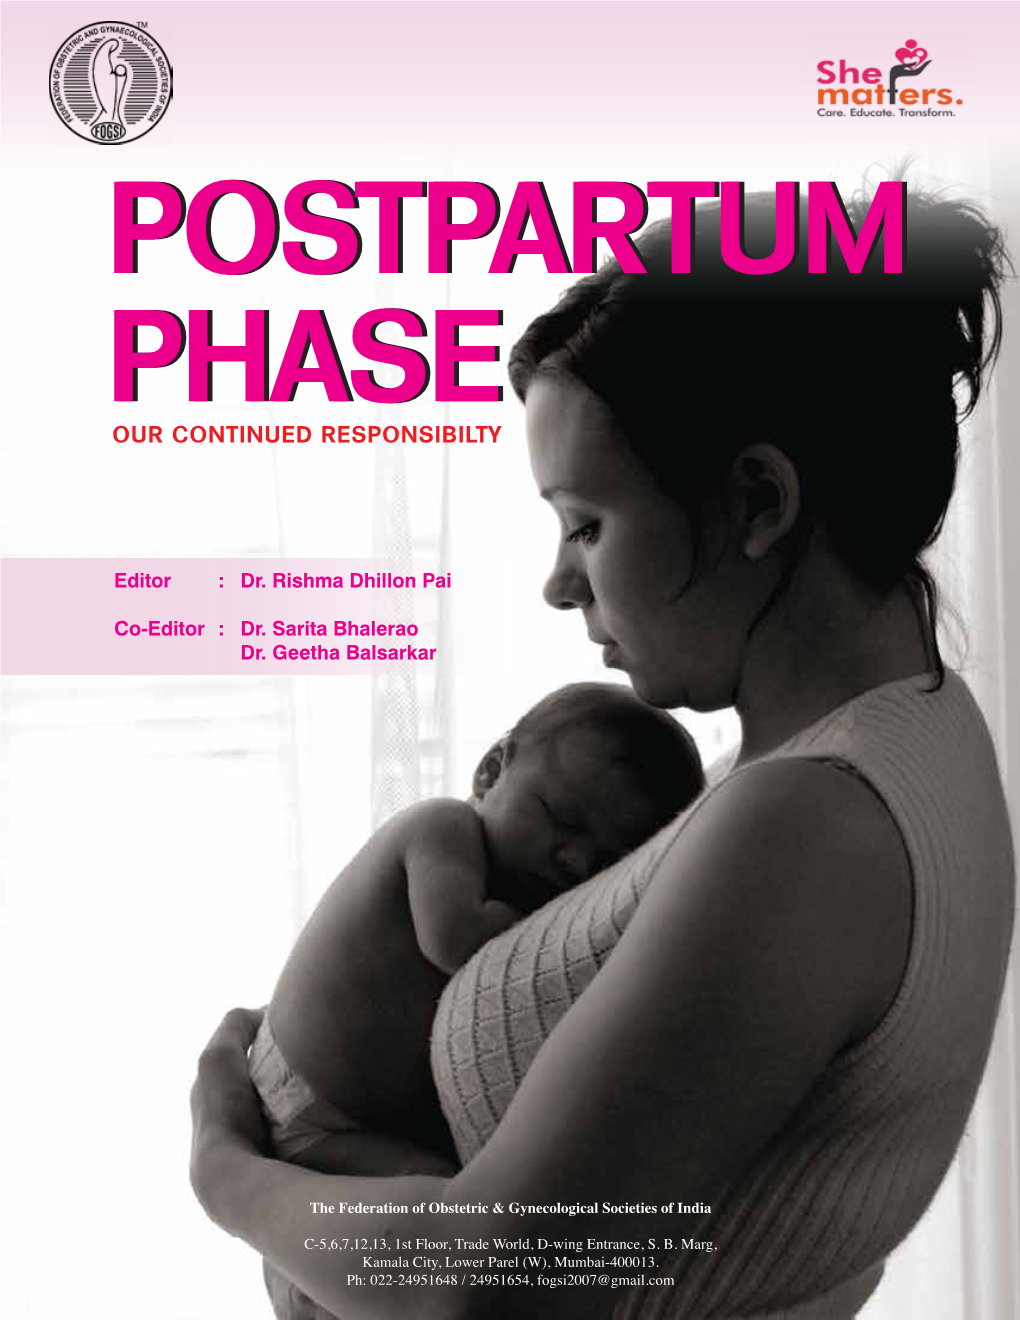 Postpartum Phase Booklet